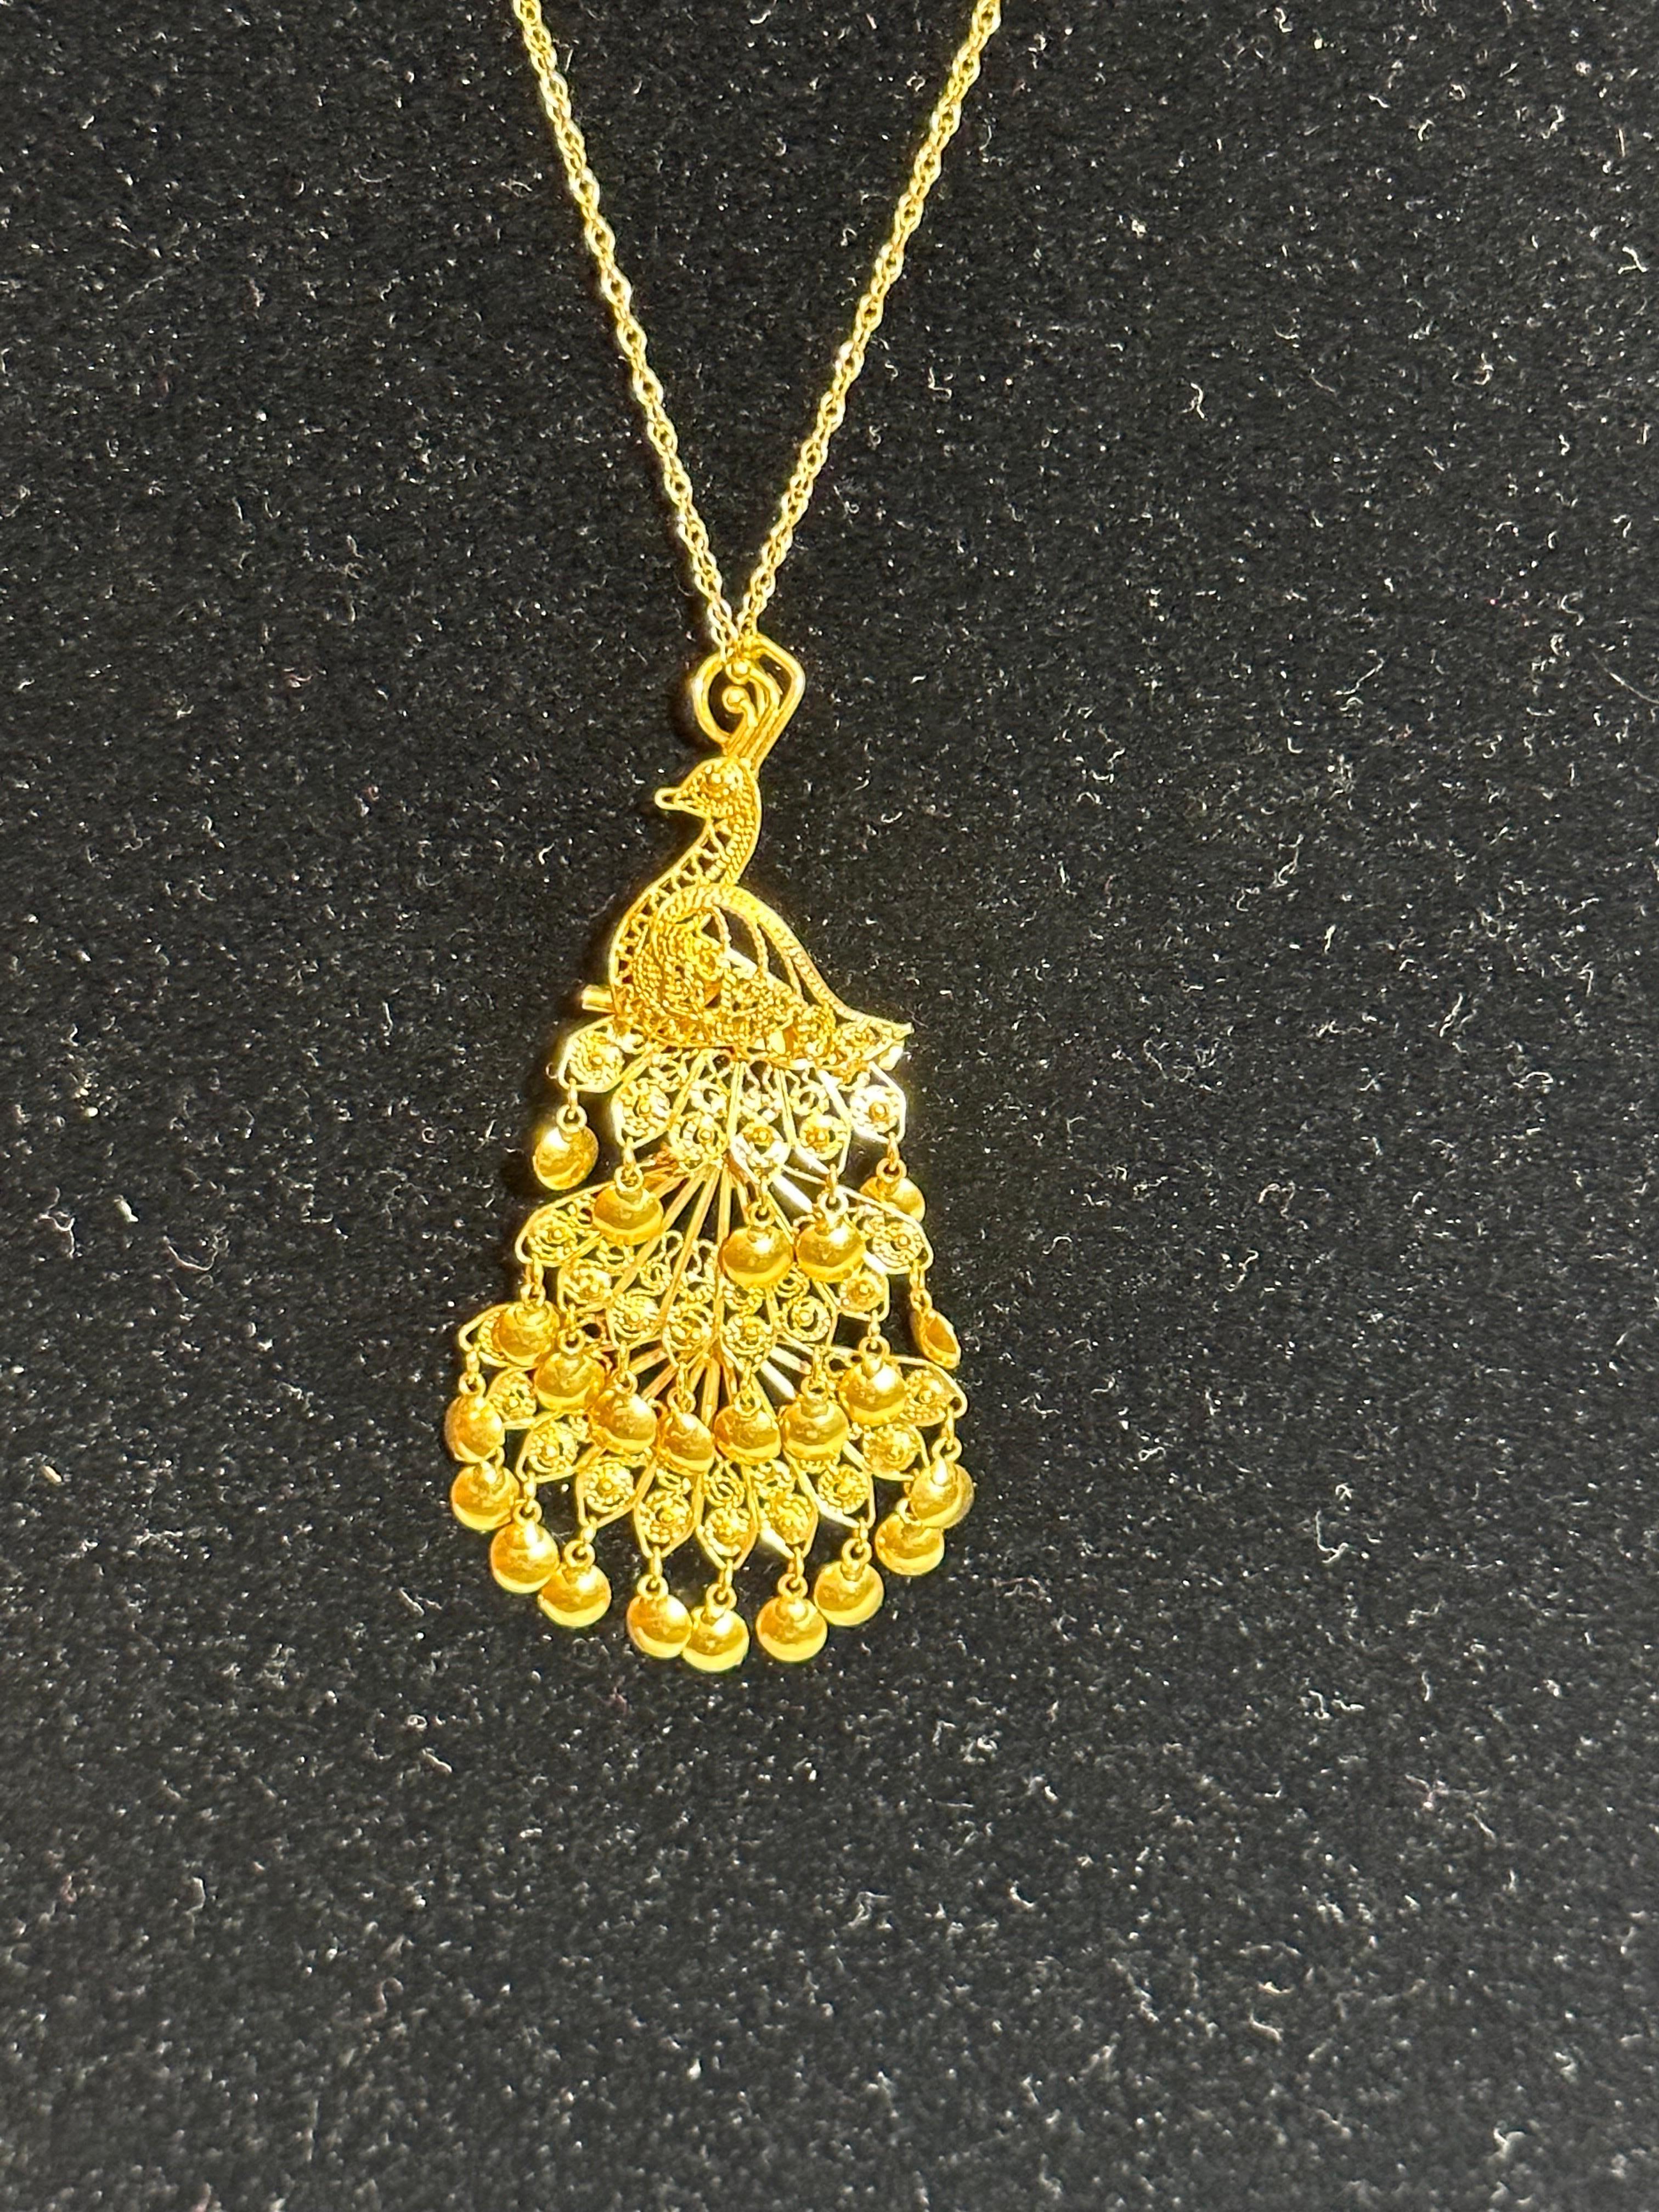 Vintage 24 Karat Yellow Gold 3.4 Gm Peacock Pin / Pendant + 14 Karat yellow gold  Chain Necklace 18